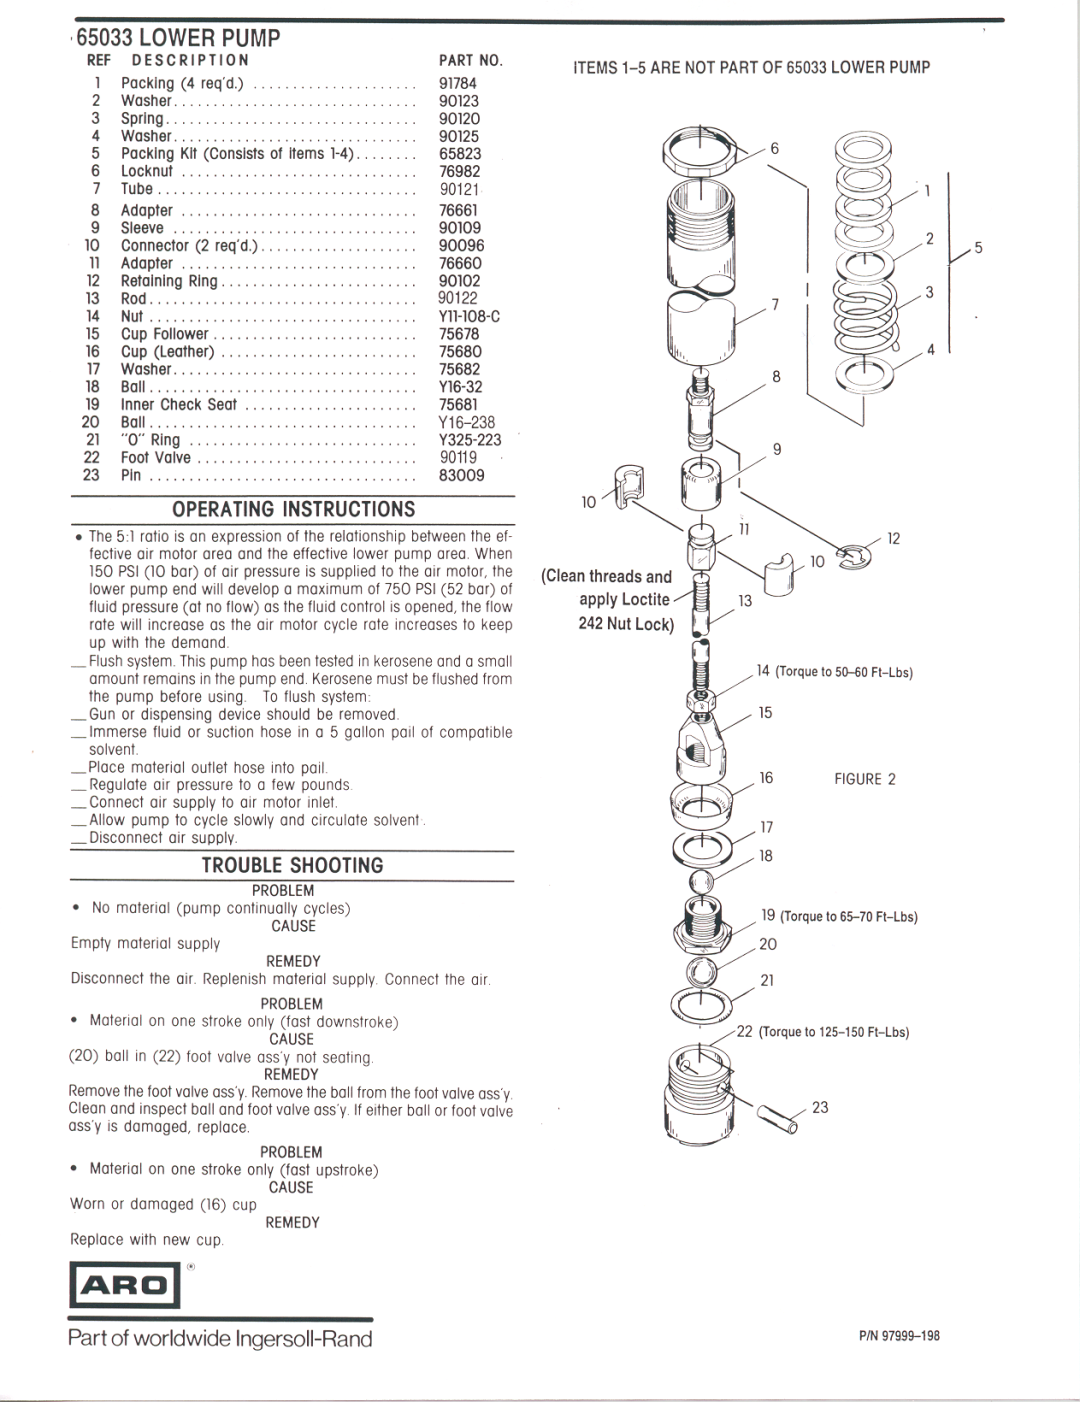 Ingersoll-Rand 612035 manual 